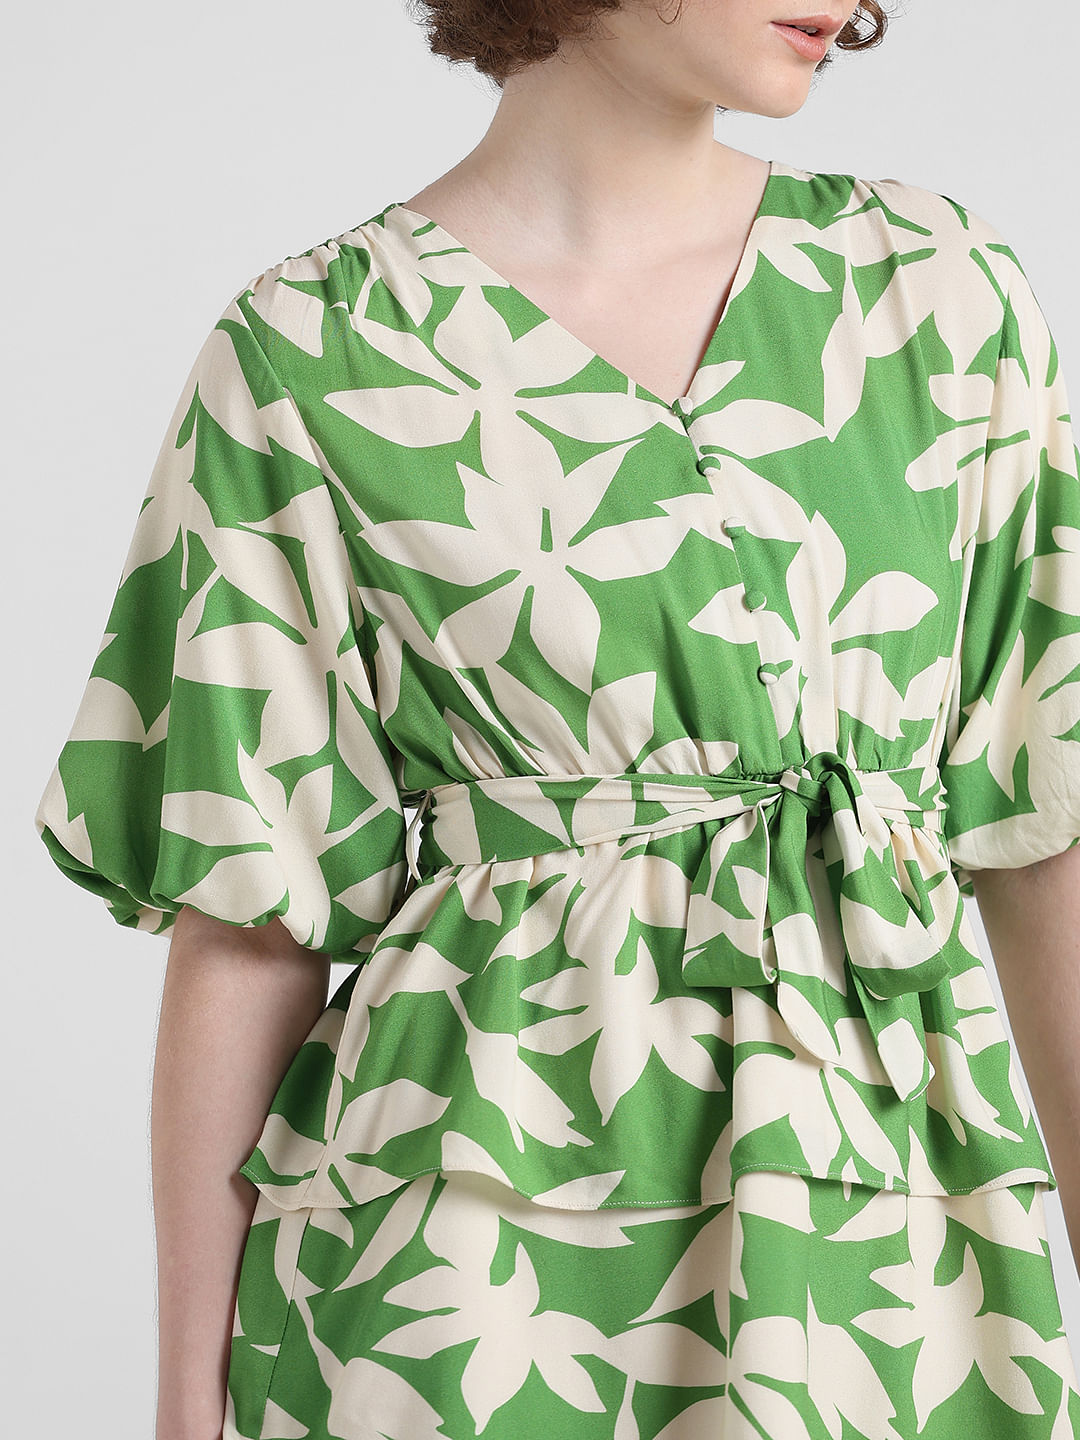 Buy oxolloxo Women Tropical Print Beachwear Viscose Dress at Amazon.in